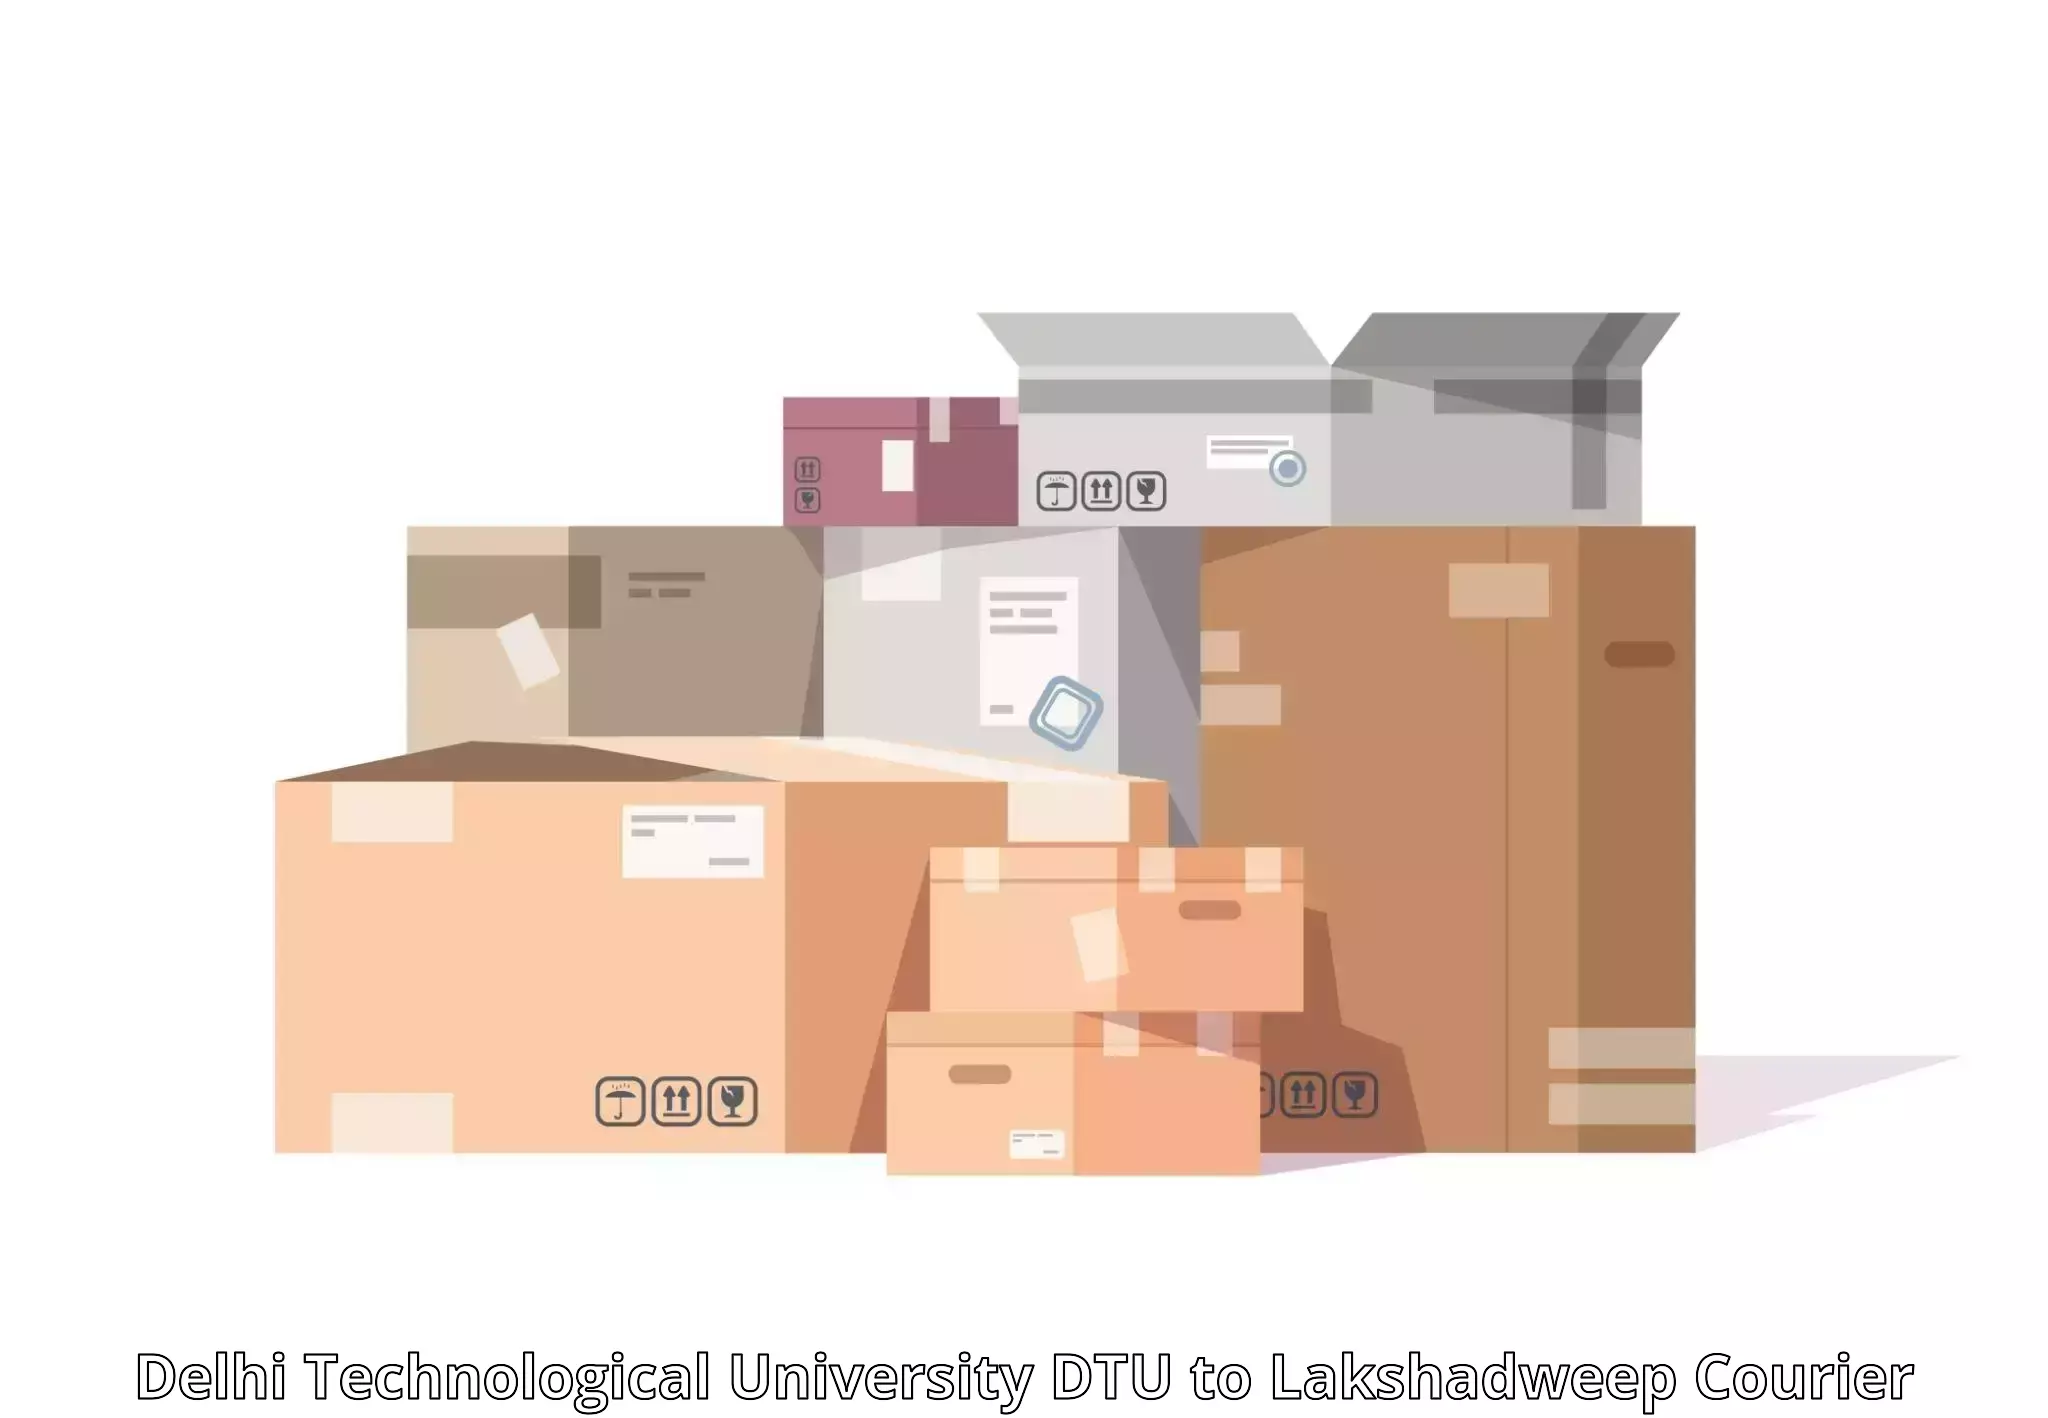 Express logistics providers Delhi Technological University DTU to Lakshadweep